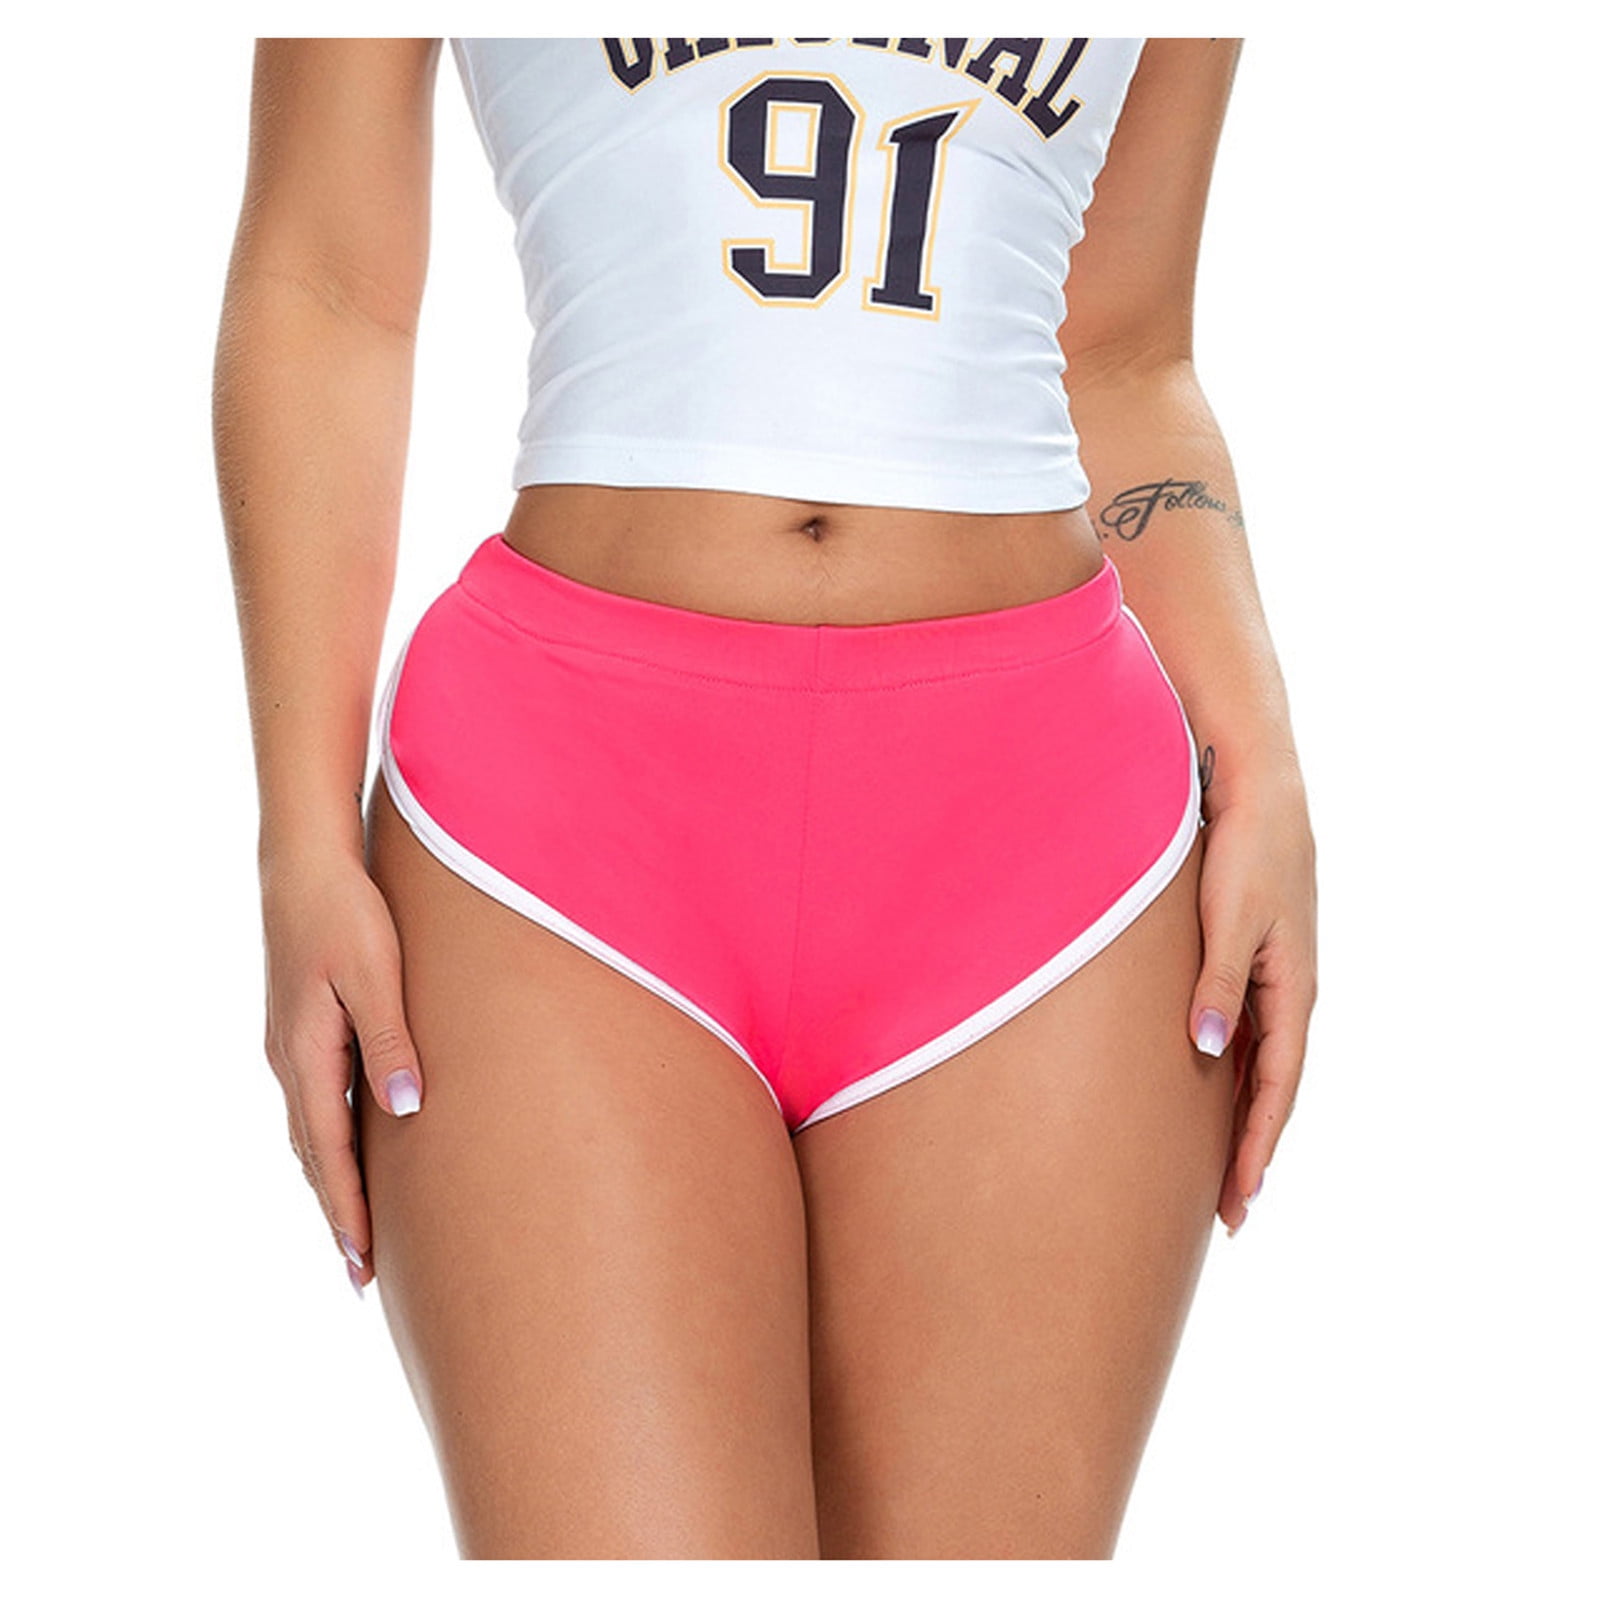 Labakihah Yoga Shorts Fashion Women Elastic Shorts Hot Summer Stretch  Sports Shorts Yoga Pants Pink 